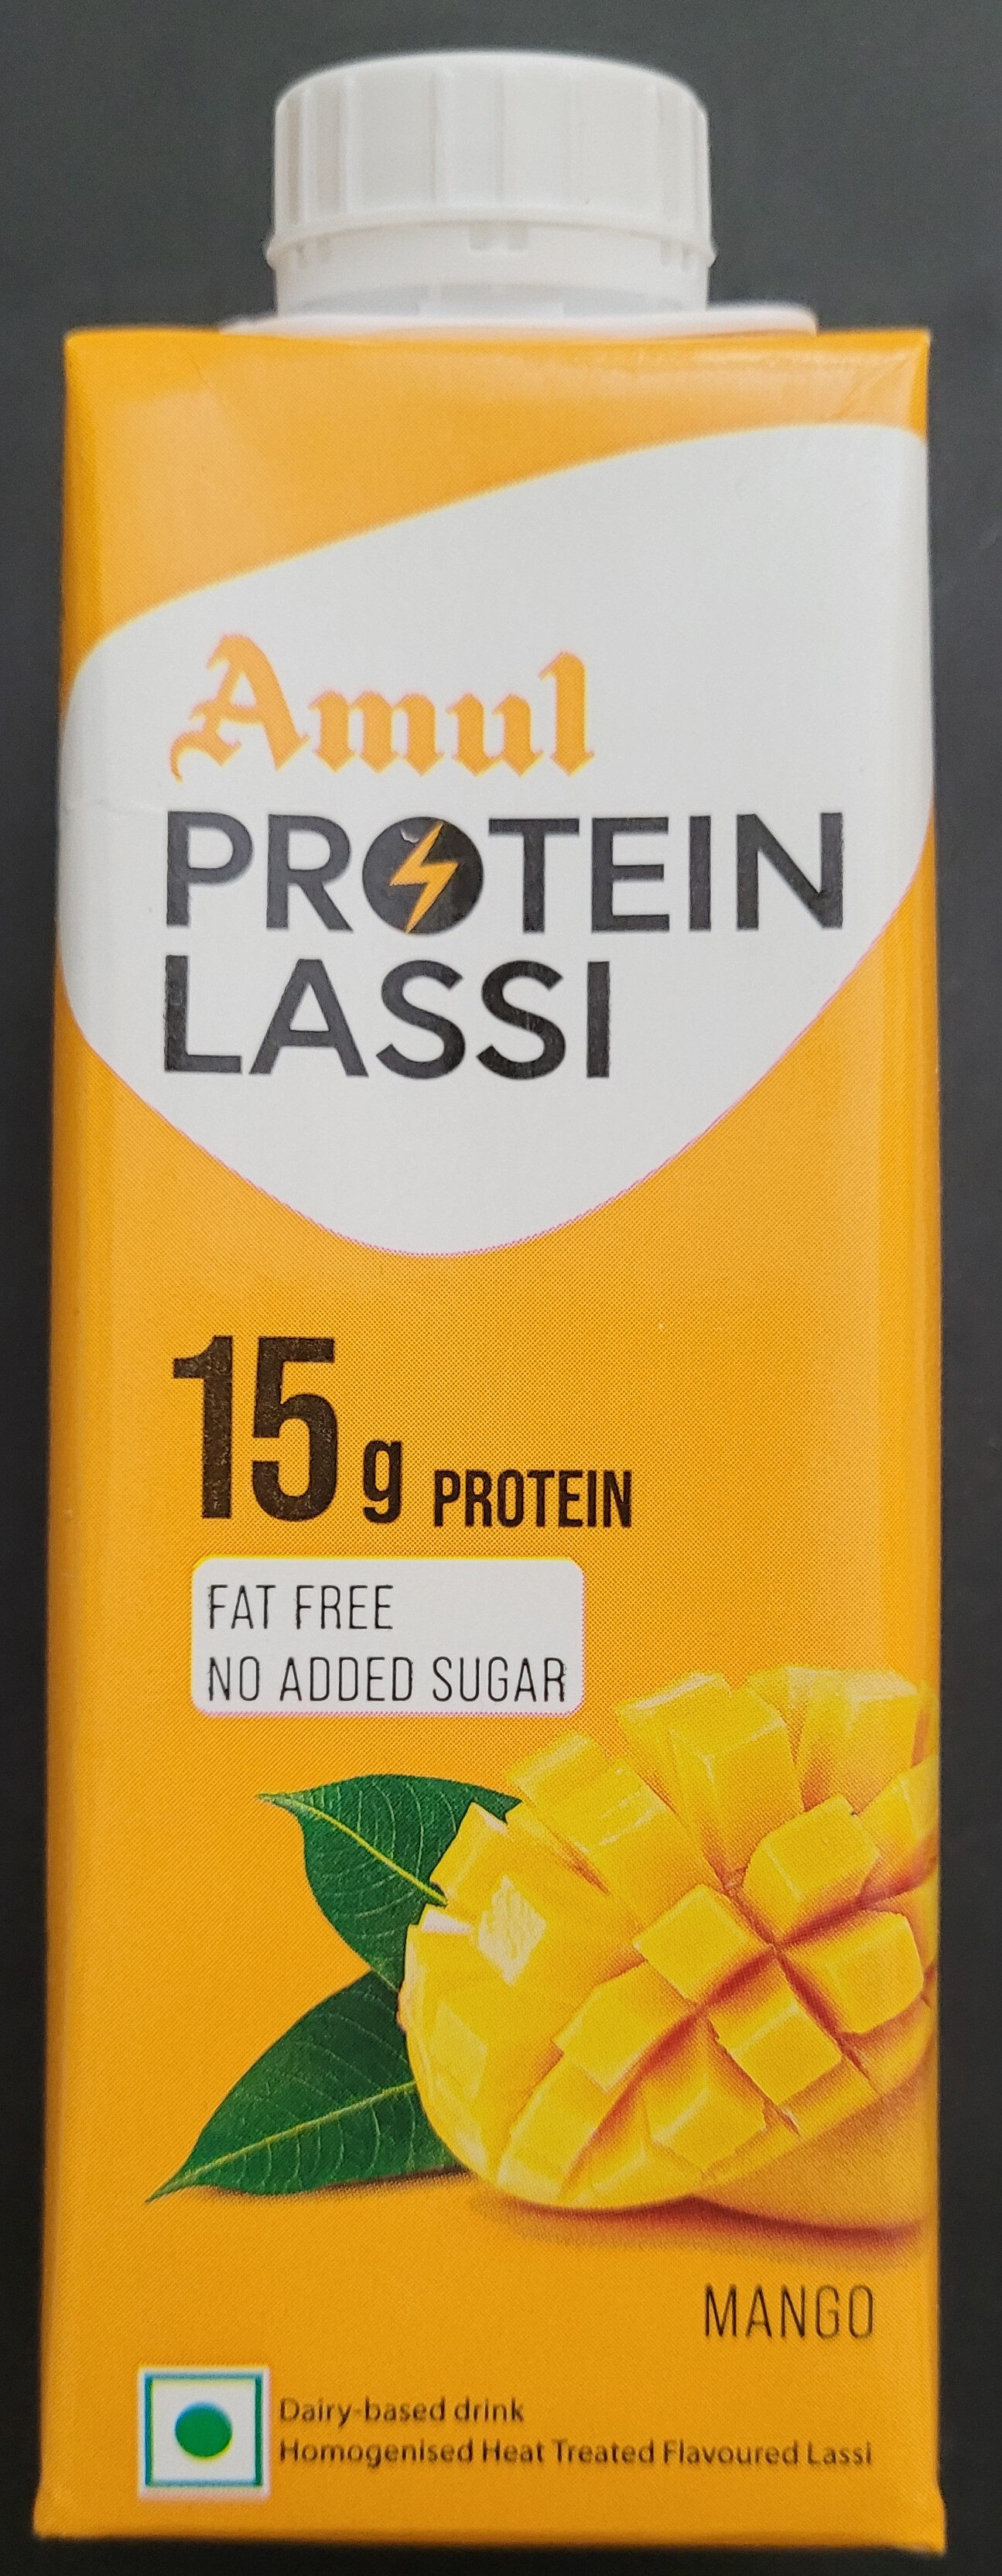 Protein Lassi - Mango flavour - Product